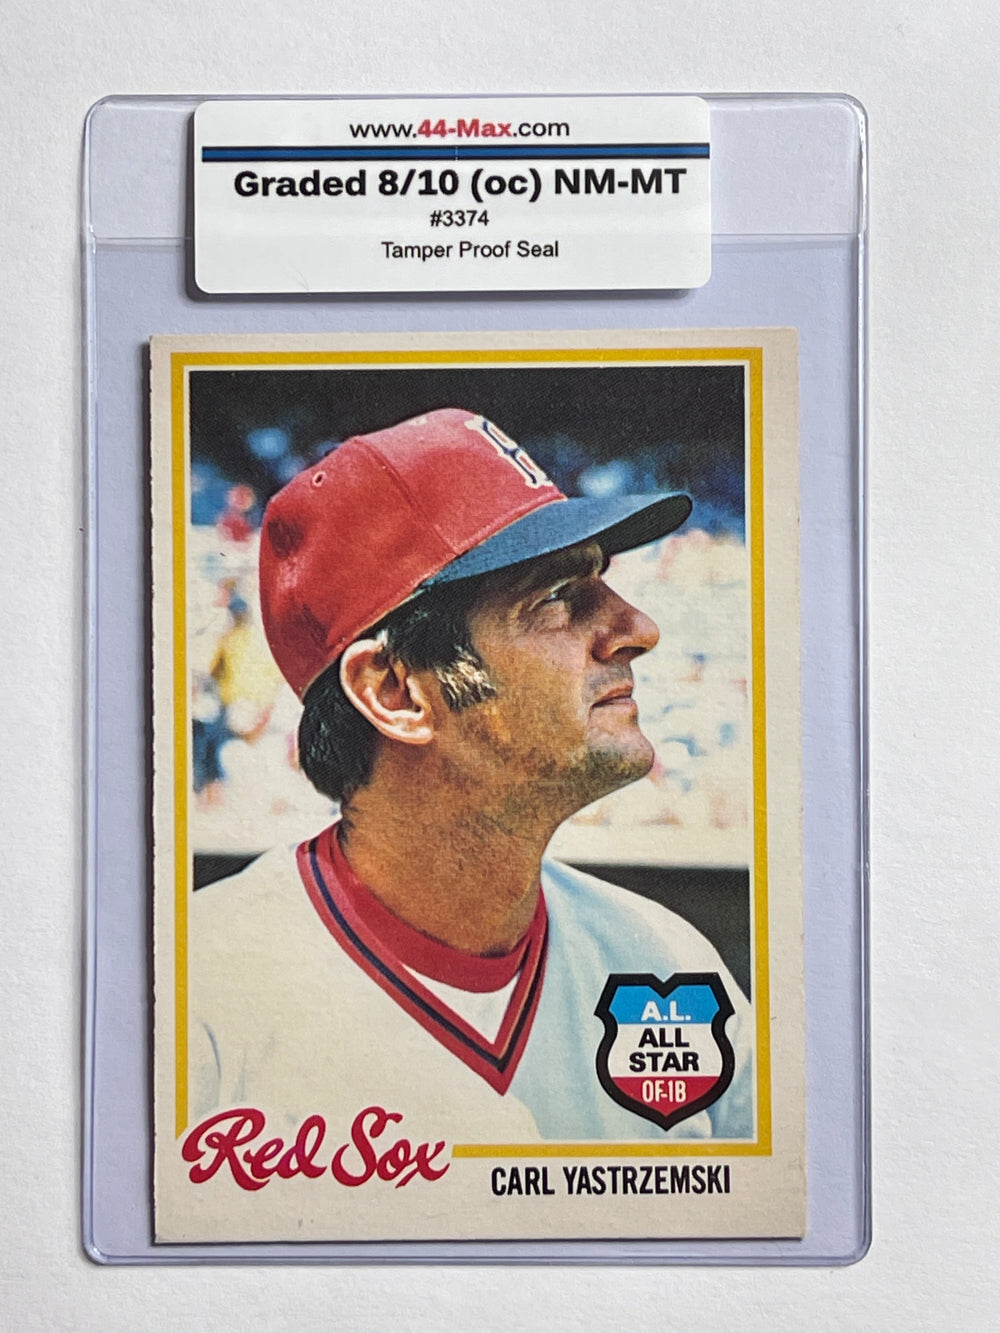 Carl Yastrzemski 1978 O-Pee-Chee Baseball Card. 44-Max 8/10 (oc) NM-MT #3374